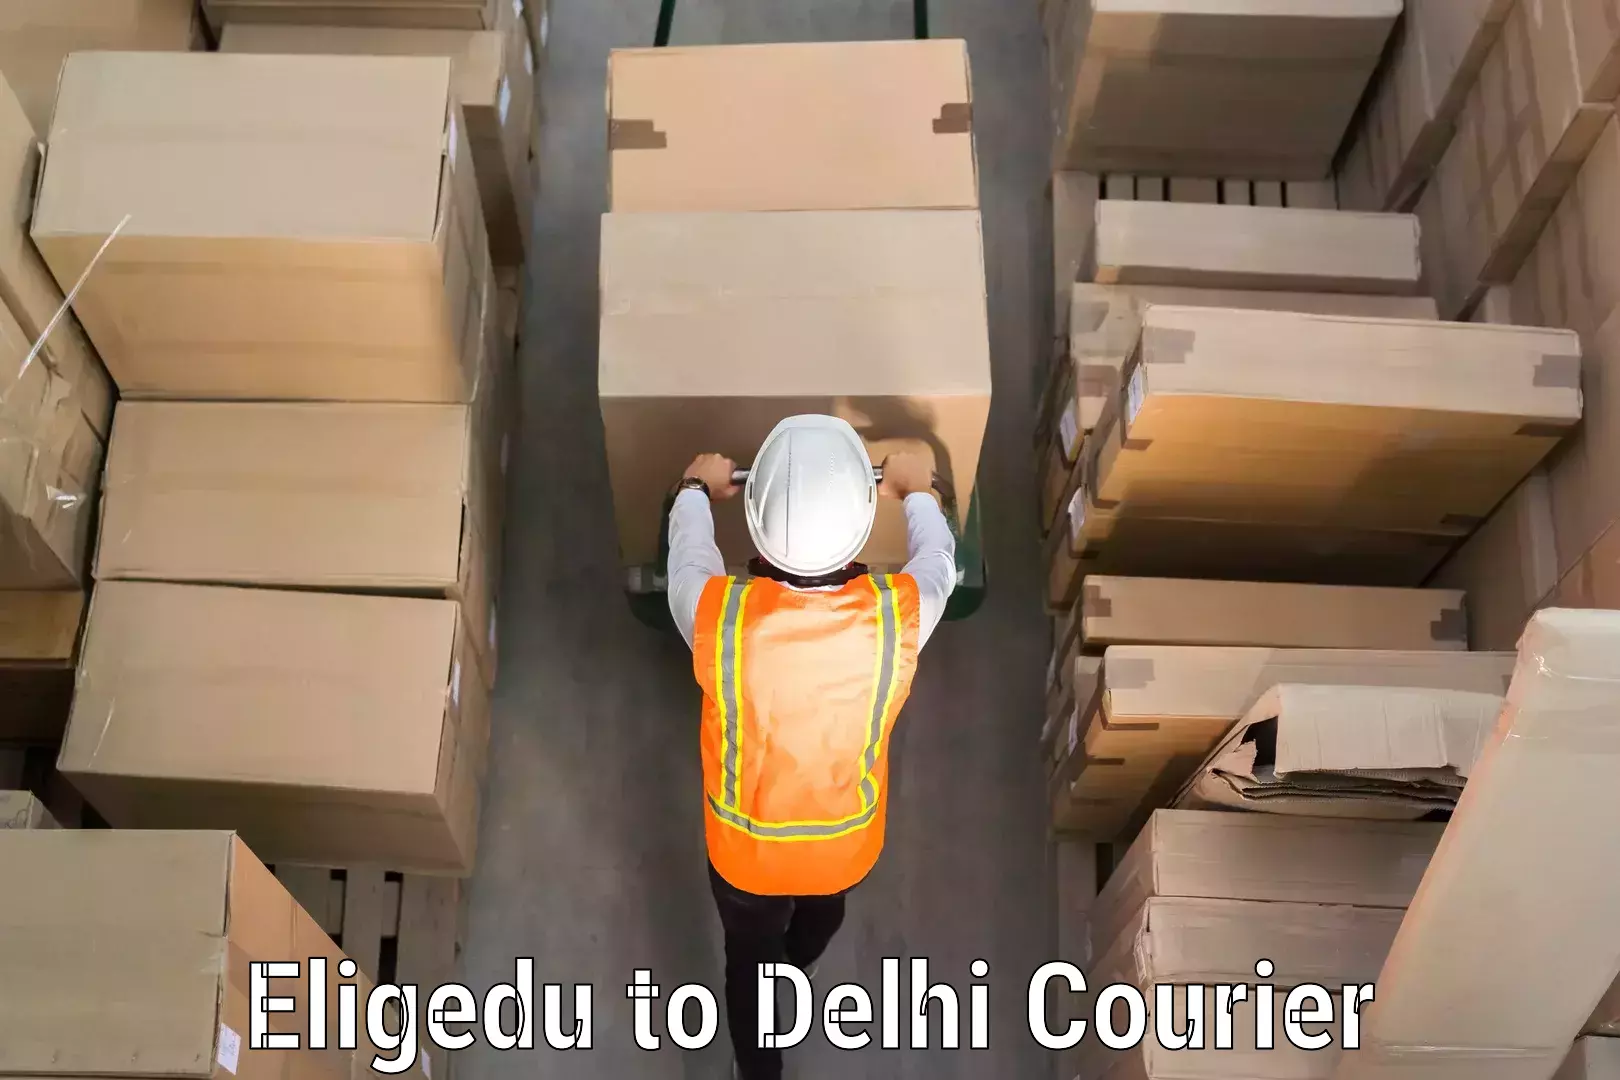 Luggage transport service Eligedu to University of Delhi